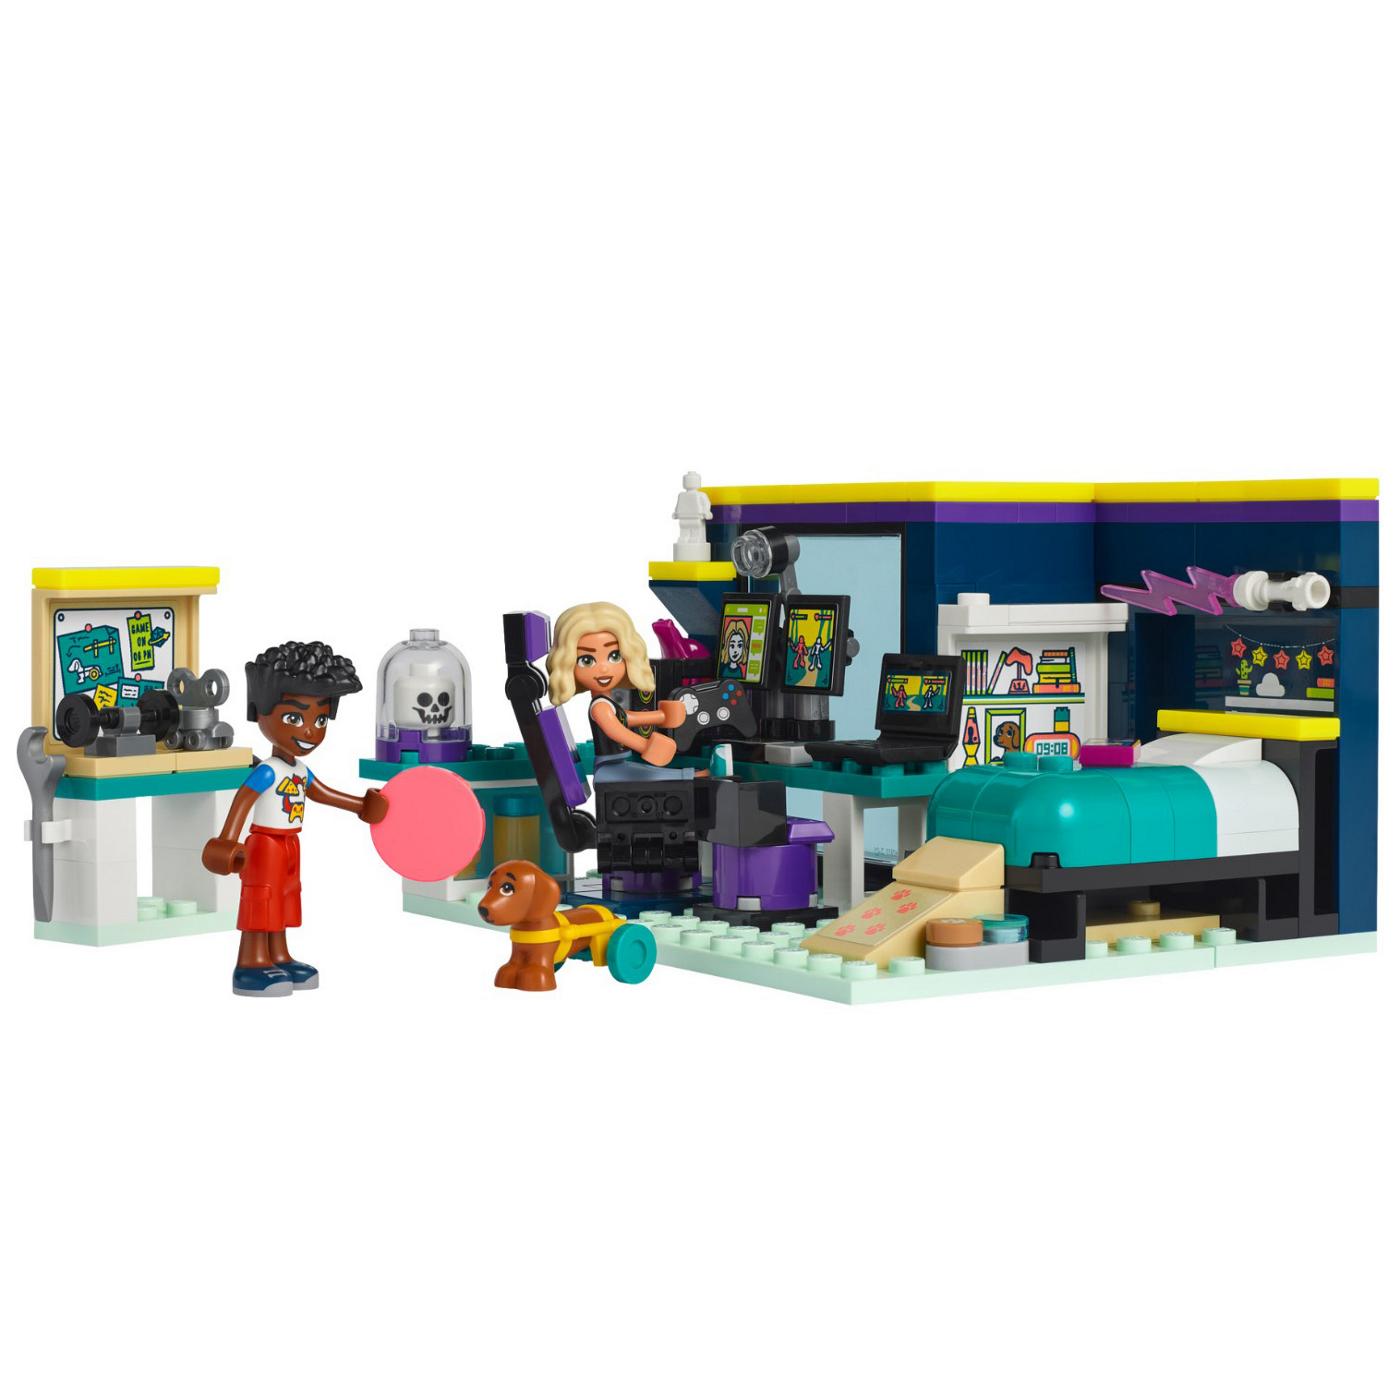 LEGO Friends Nova's Room Set; image 2 of 2